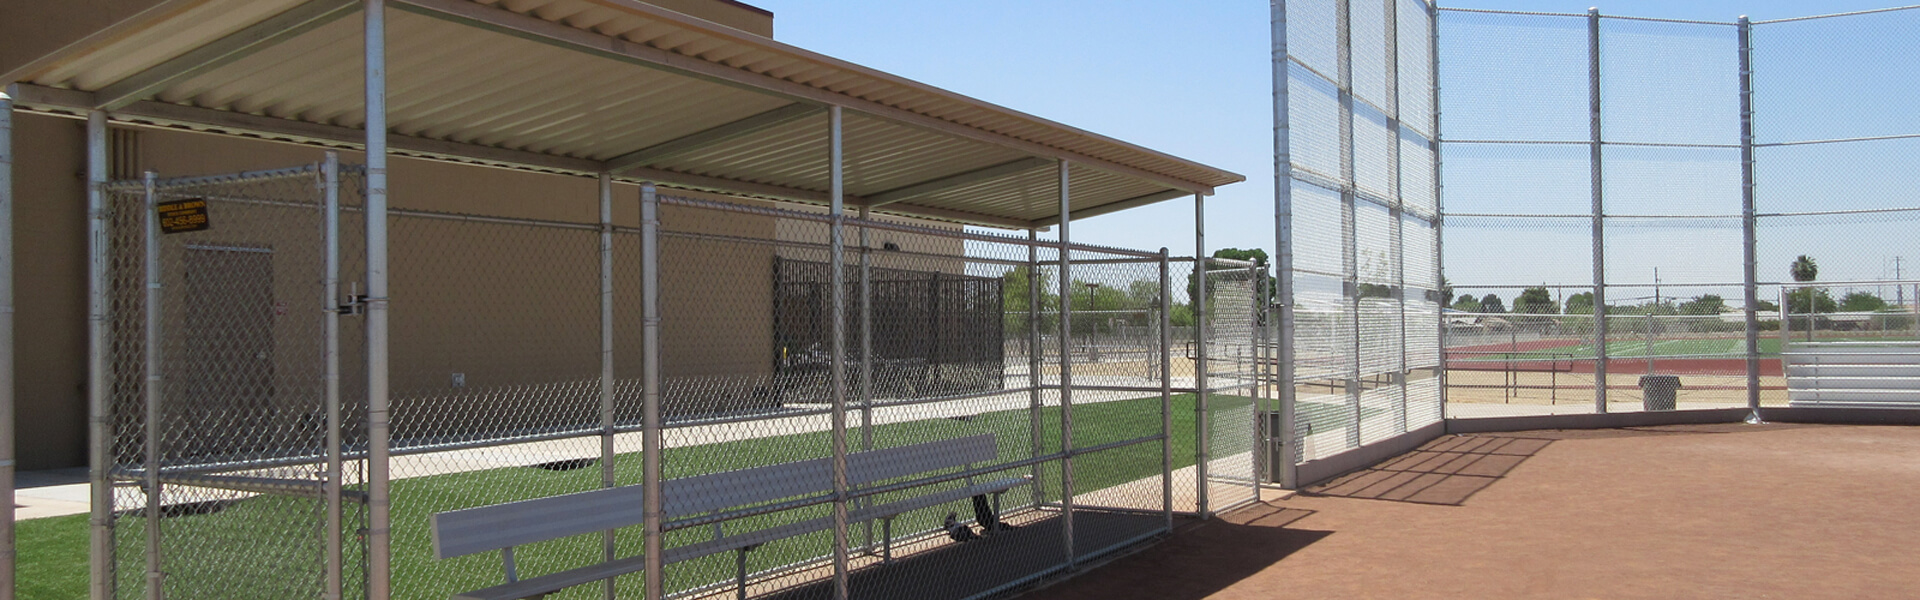 baseball-field-fence